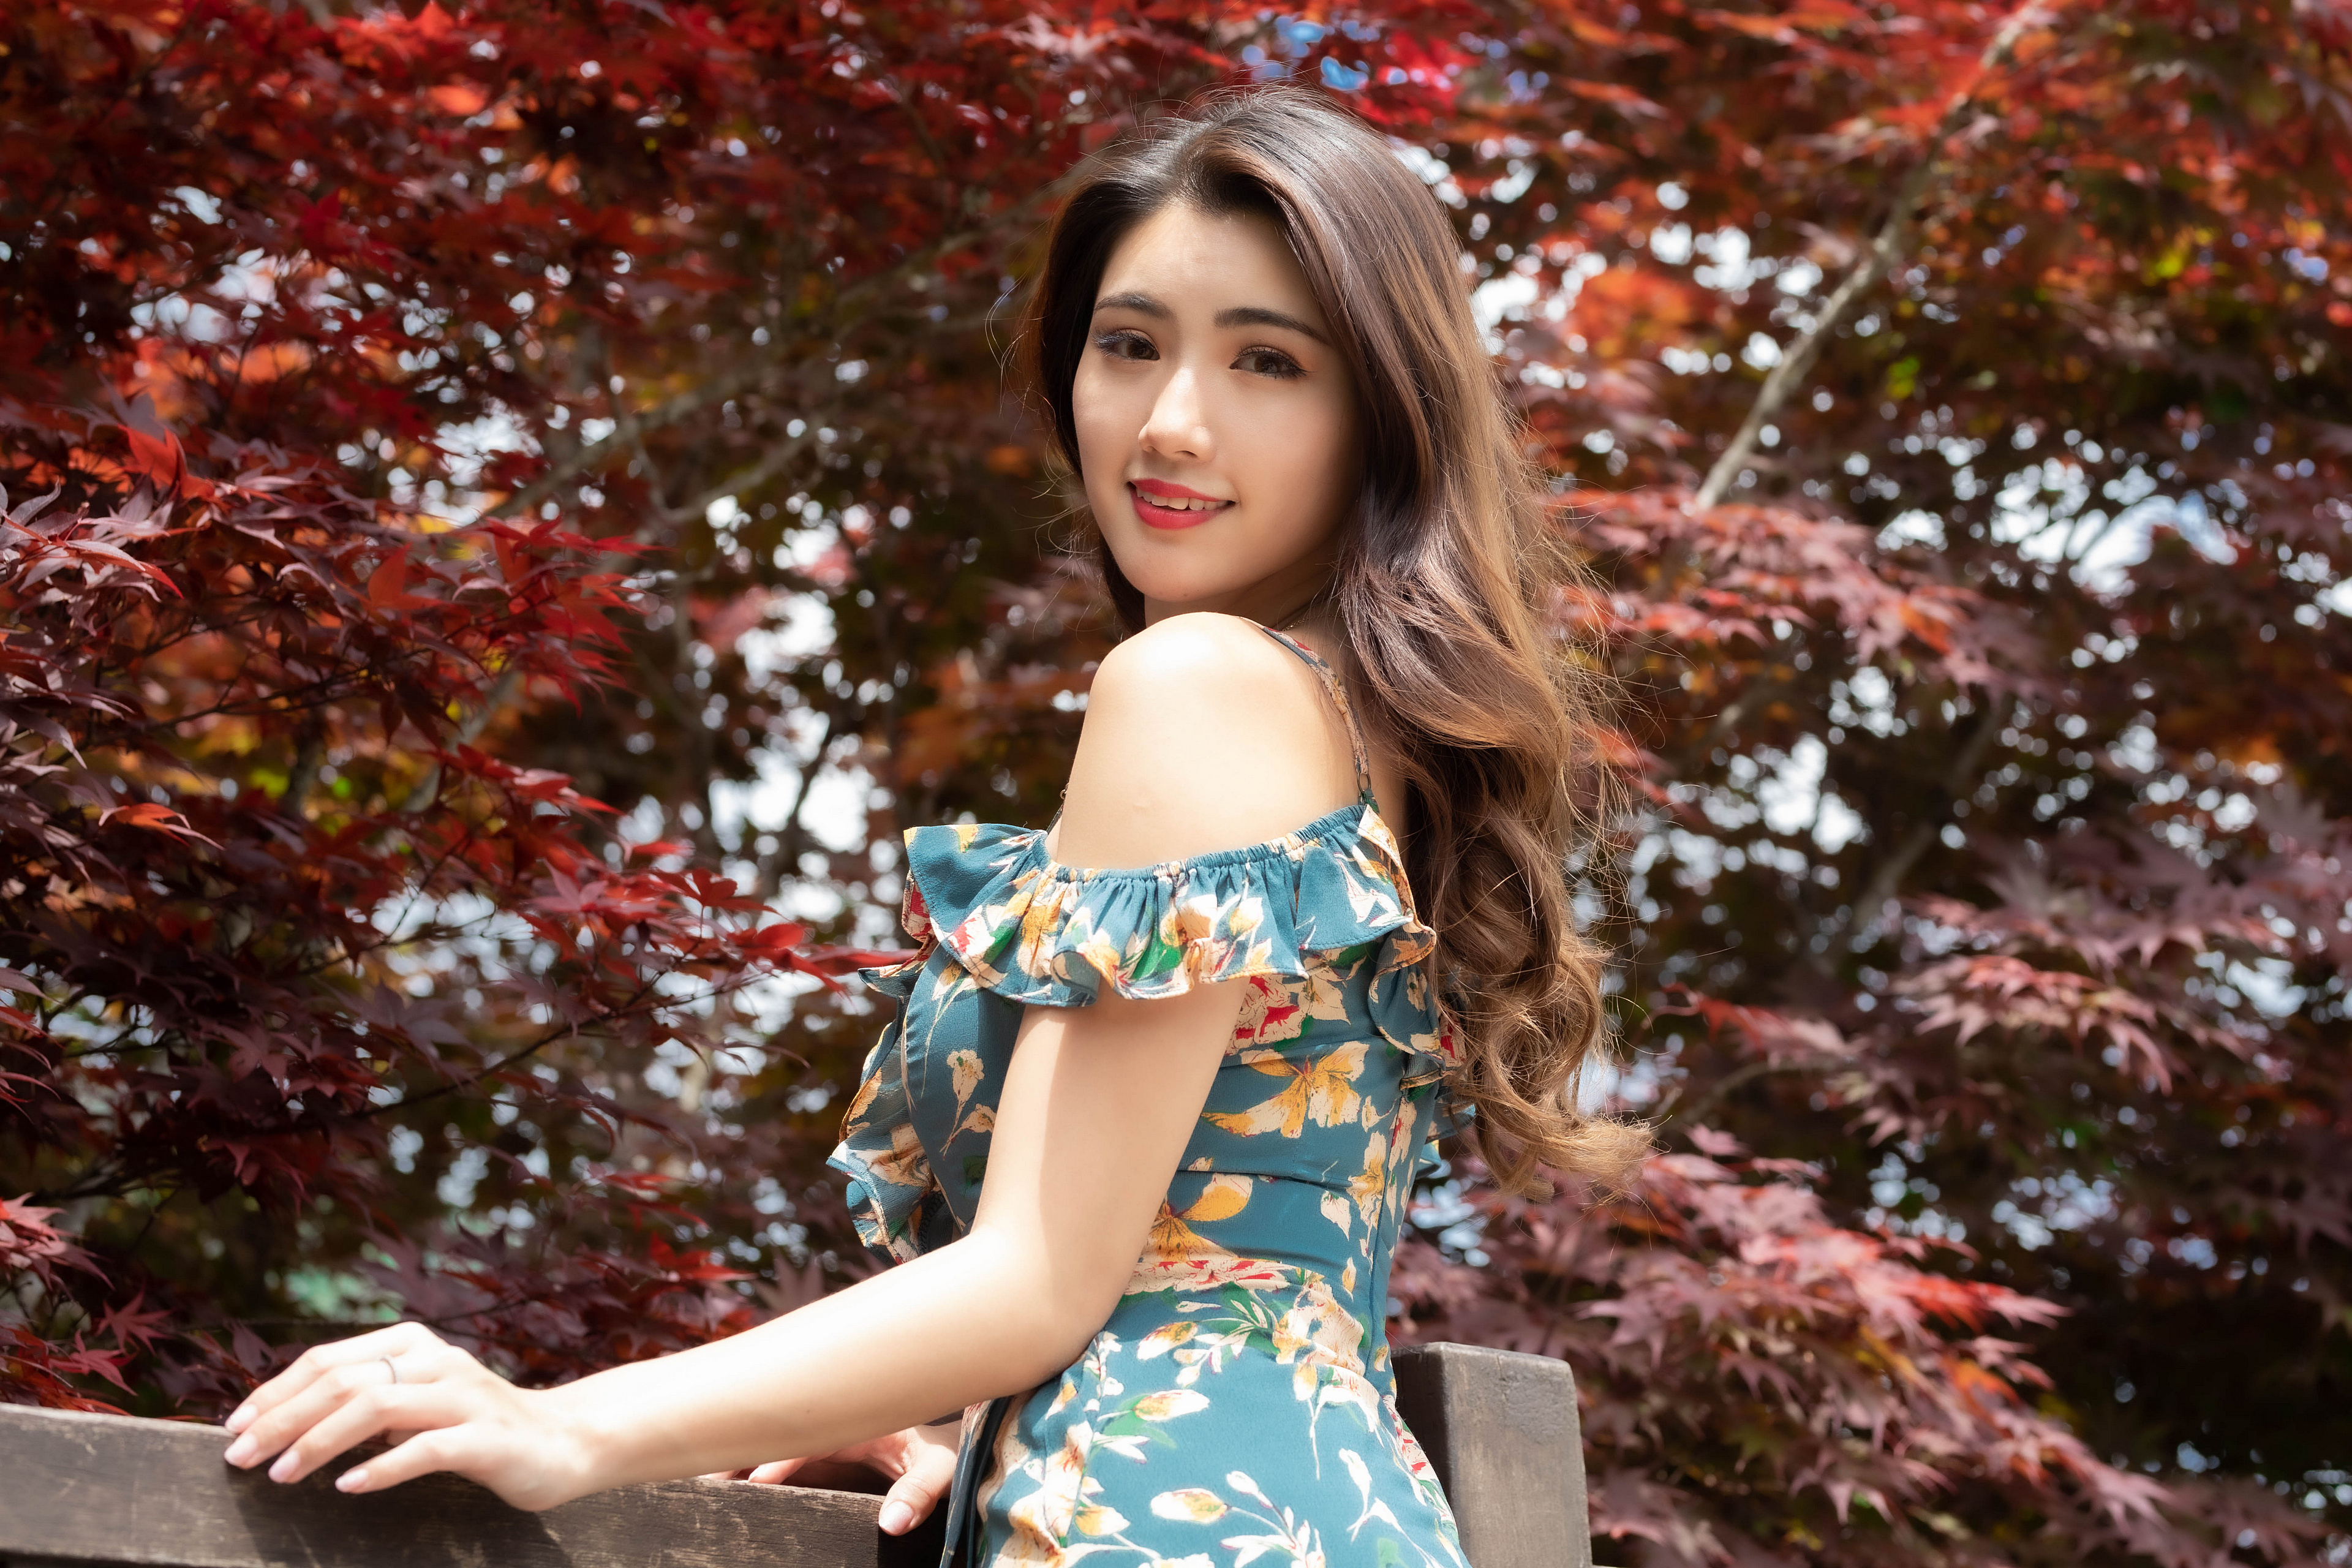 Asian Model Women Long Hair Dark Hair Depth Of Field Trees Leaves Flower Dress Railings Leaning Look 3840x2560